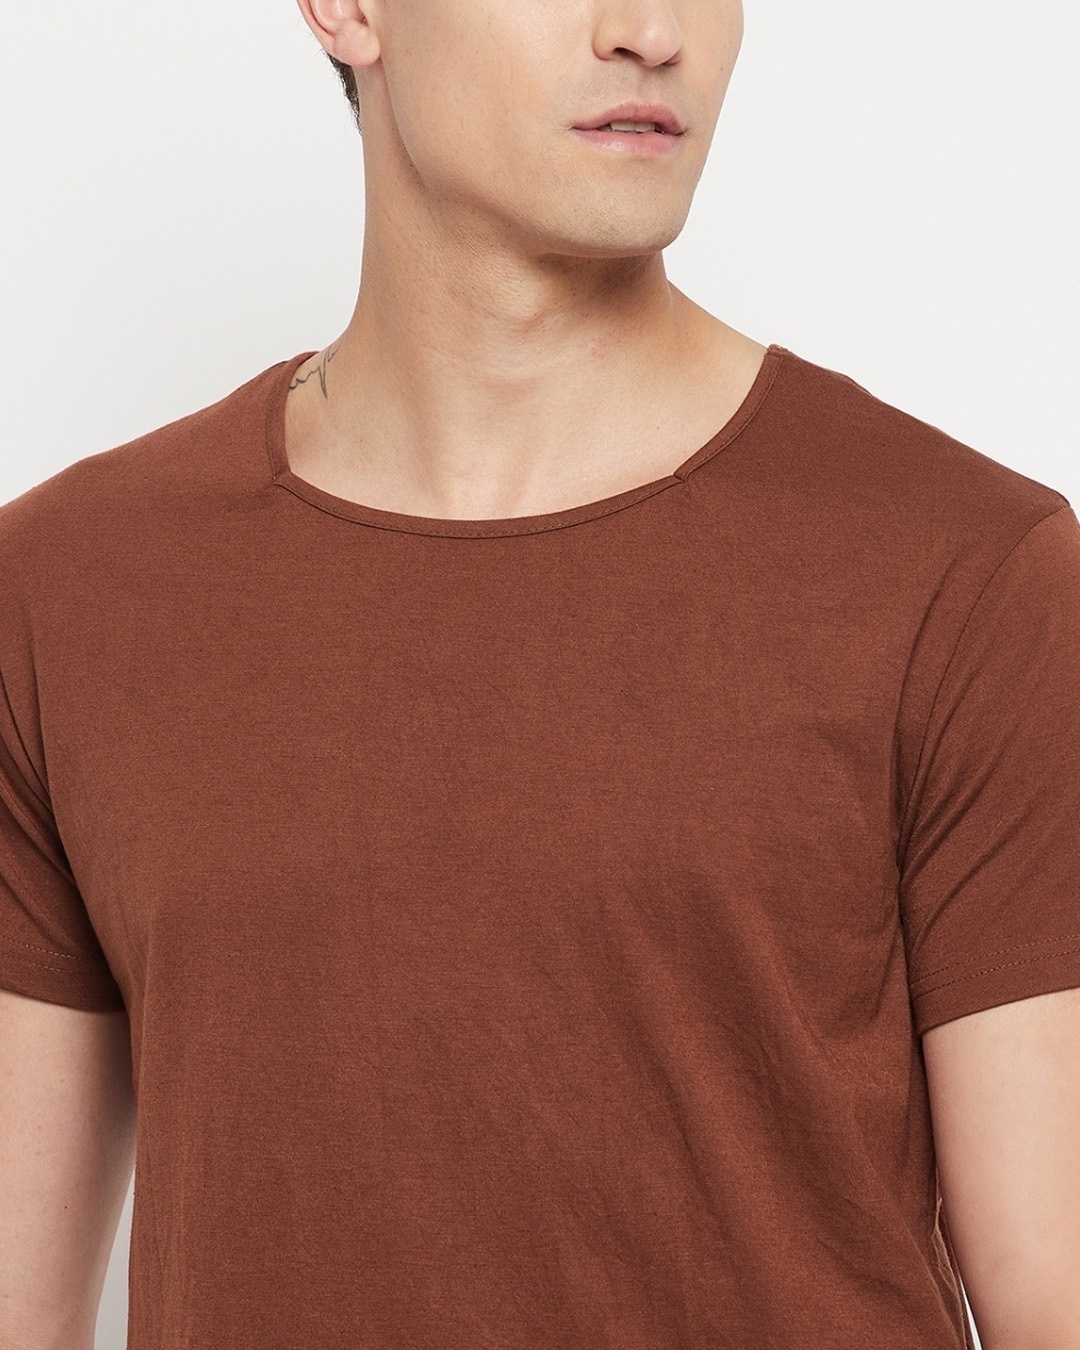 Shop Men's Brown Slim Fit T-shirt